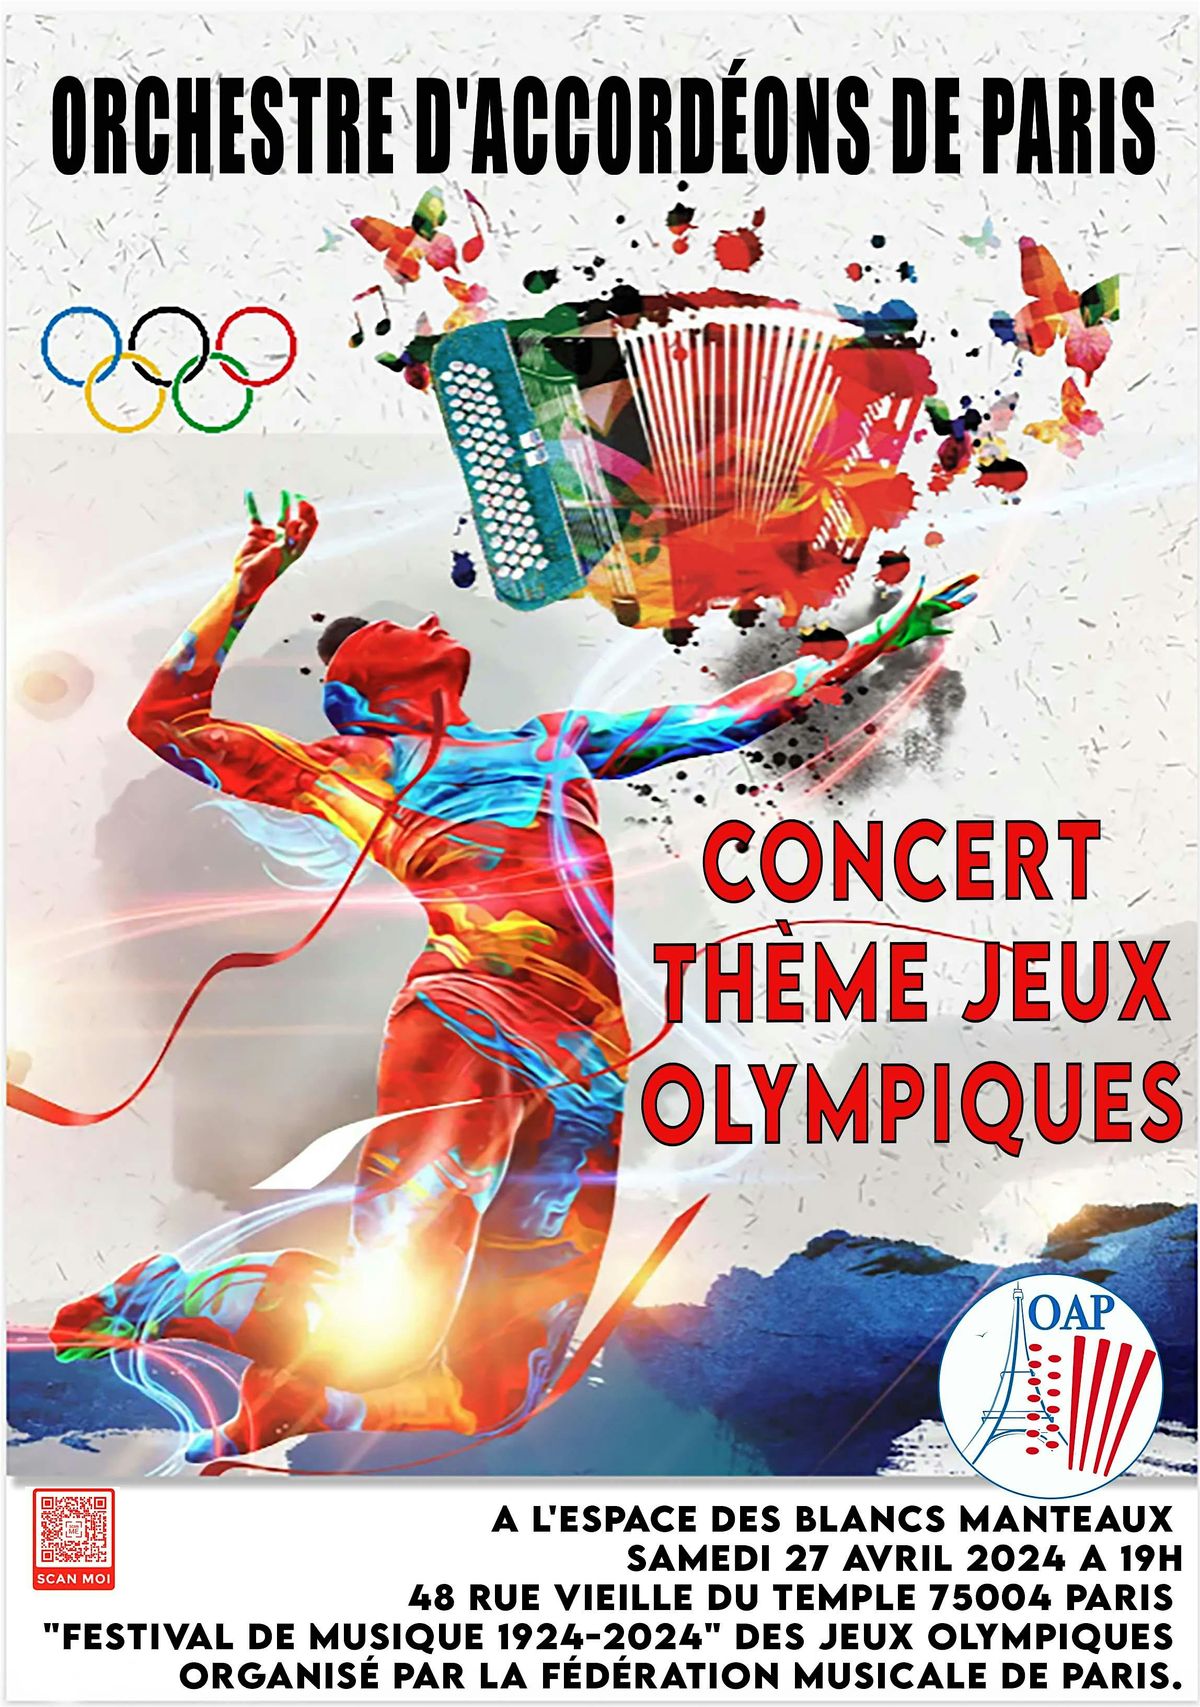 Concert Orchestre d'Accord\u00e9ons de Paris th\u00e8me jeux olympiques